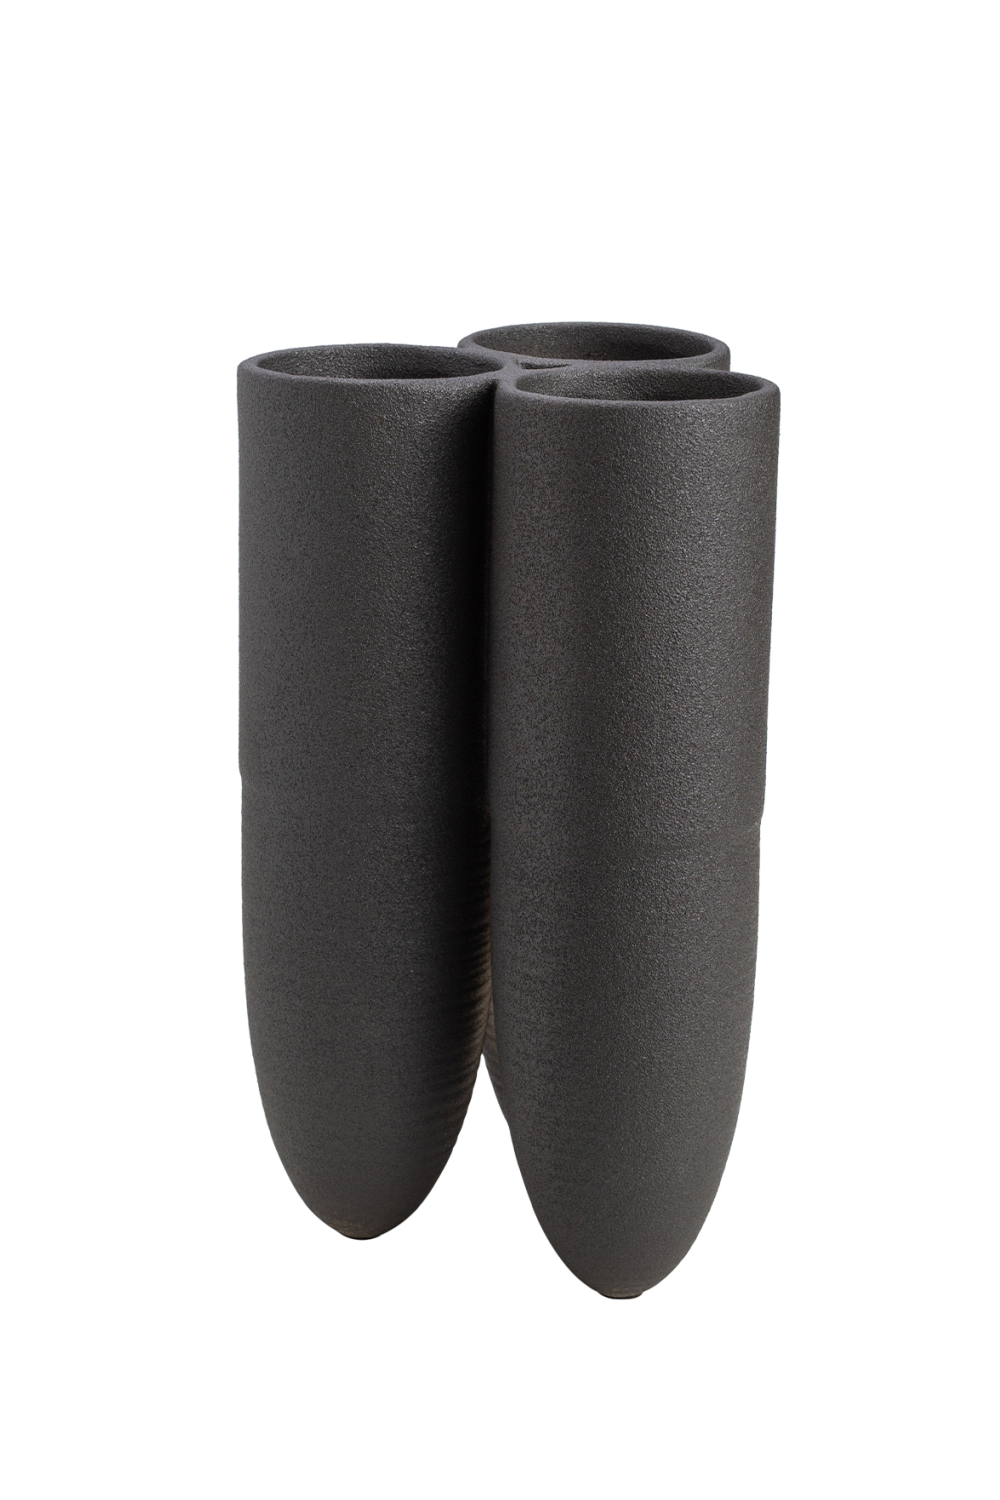 Black Ceramic Novelty Vase | Liang & Eimil Torpedo | OROA.com